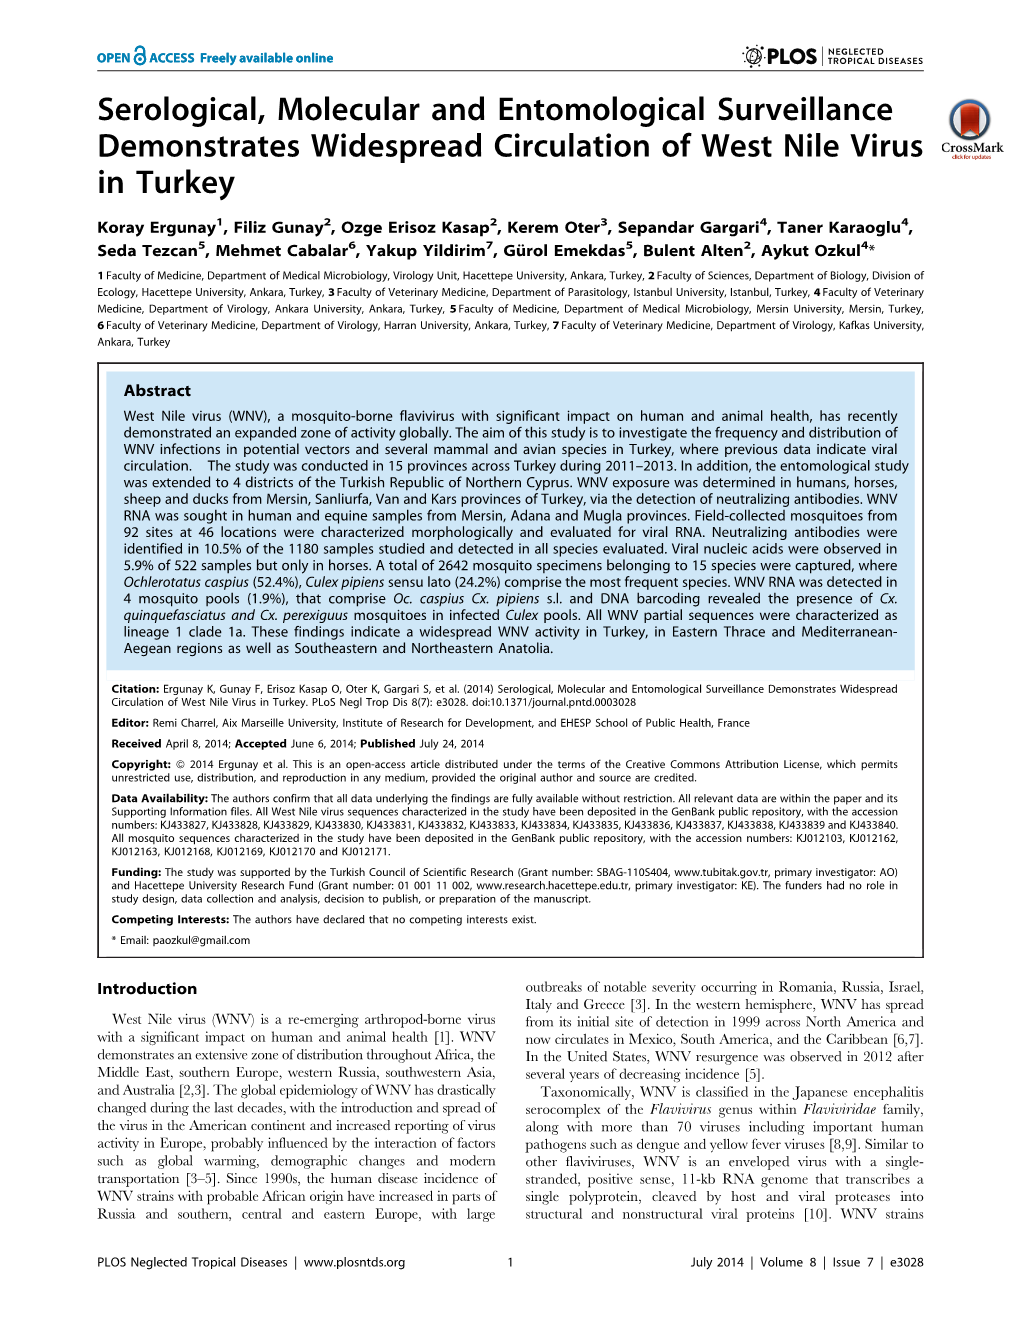 Serological, Molecular and Entomological Surveillance Demonstrates Widespread Circulation of West Nile Virus in Turkey